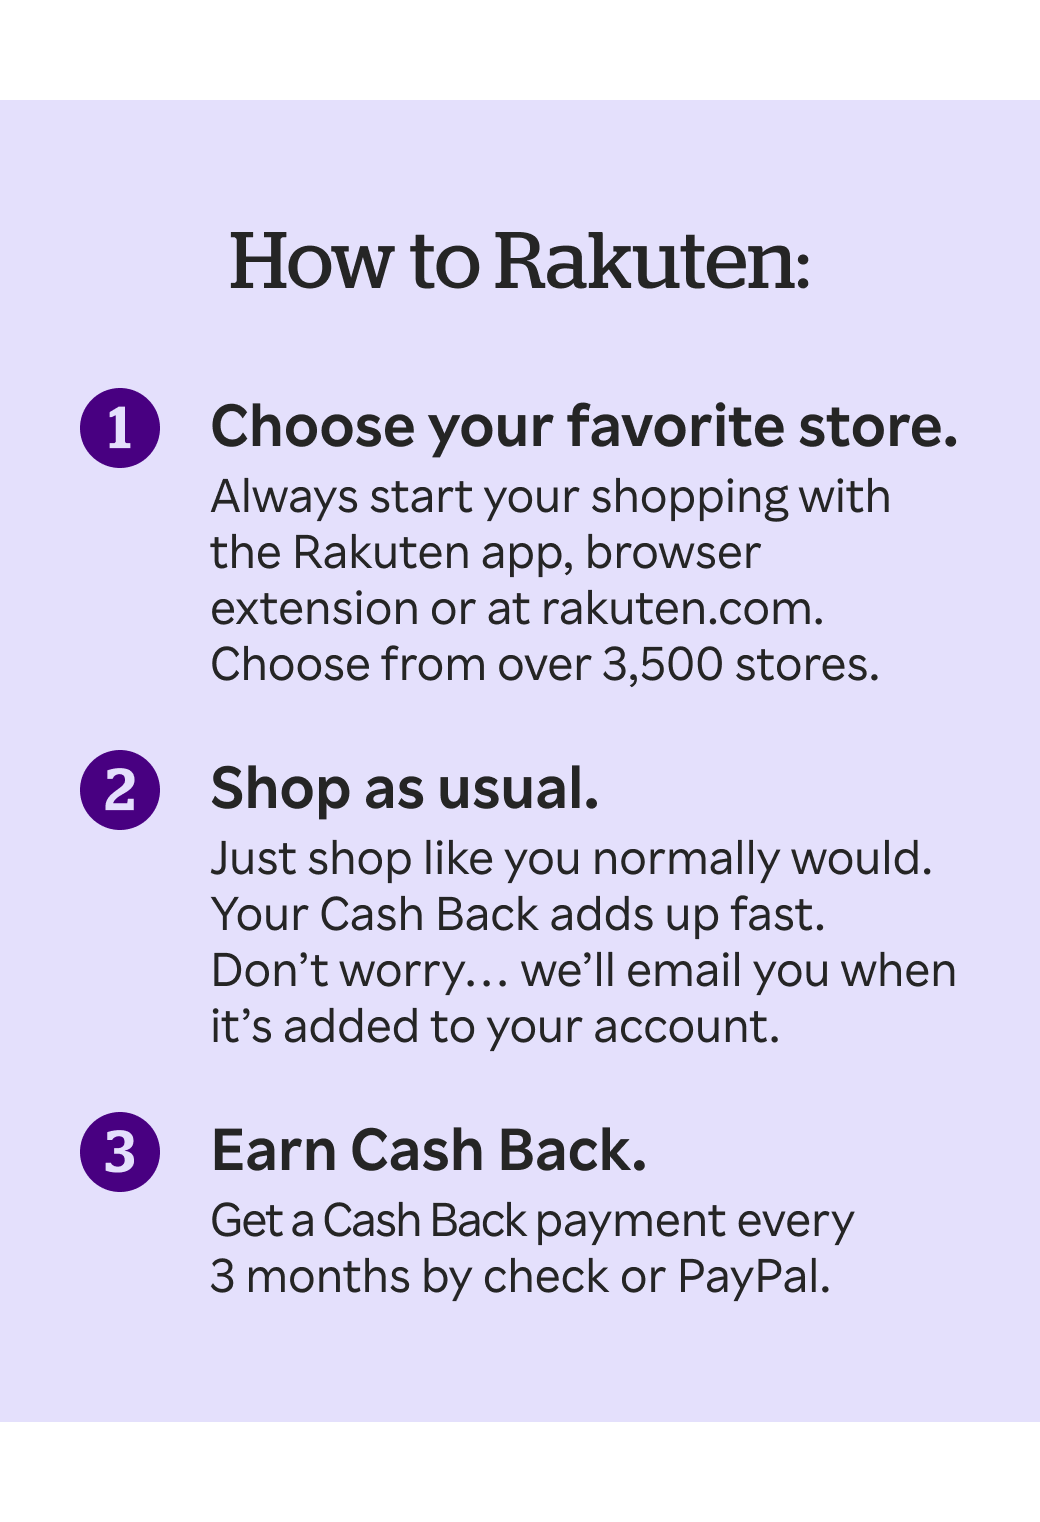 Go to Rakuten on our App, website, or browser extension Shop link normal. Get Cash Back